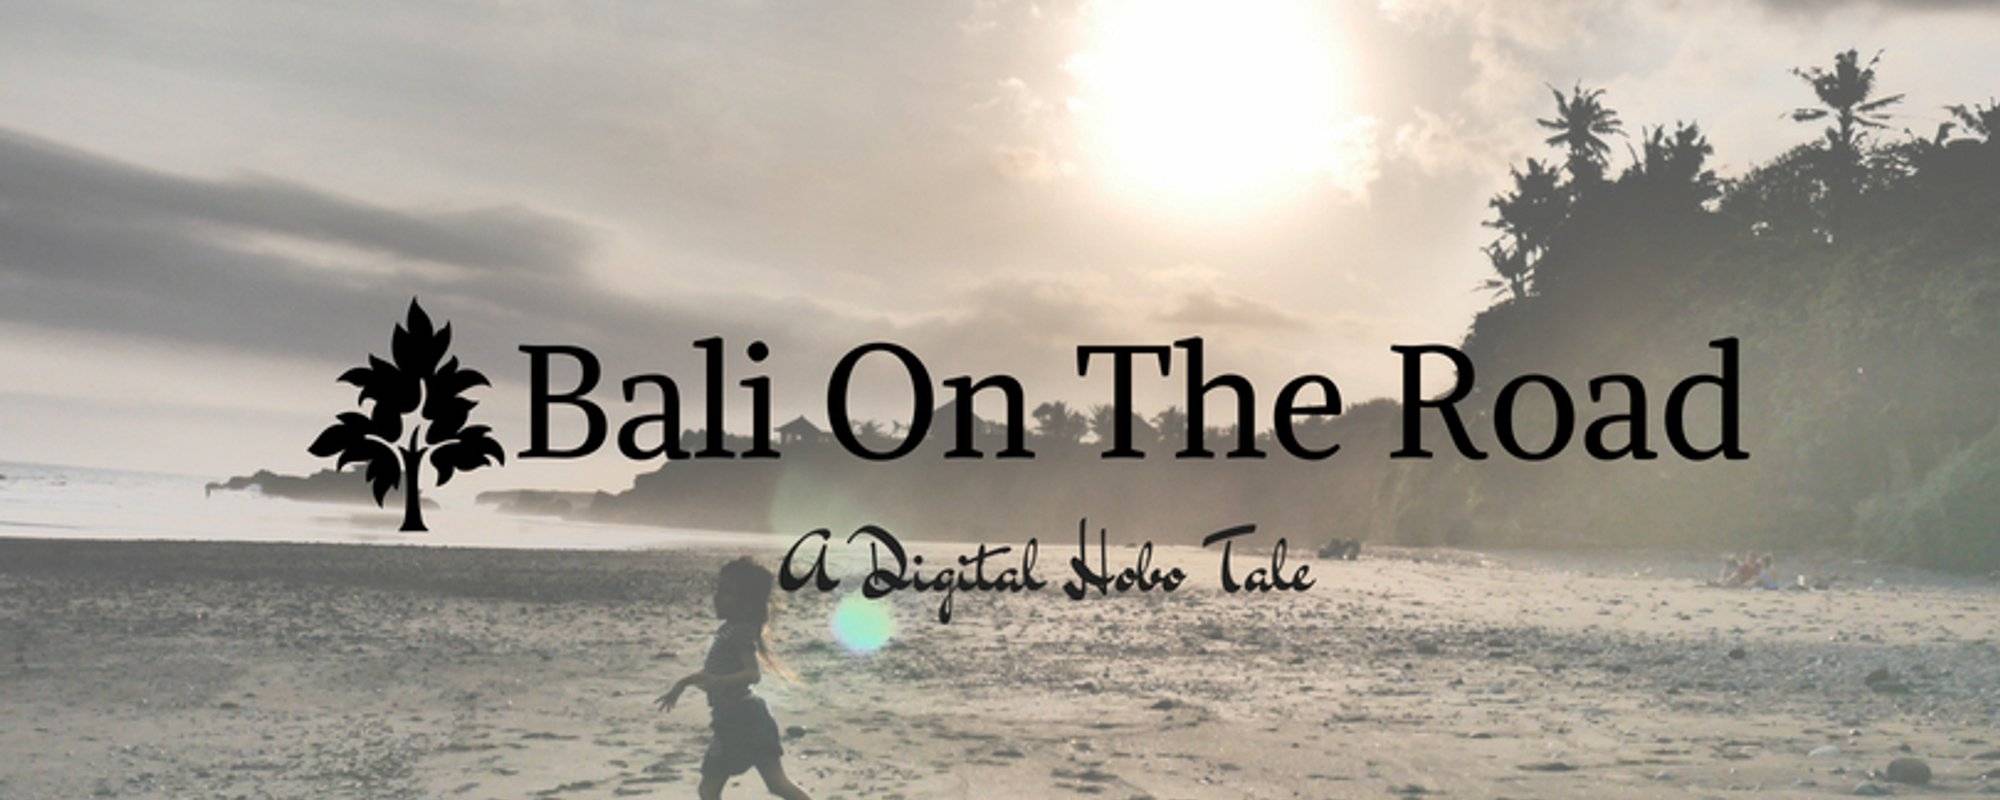 BALI ON THE ROAD- BALIAN BEACH TRAVEL GUIDE